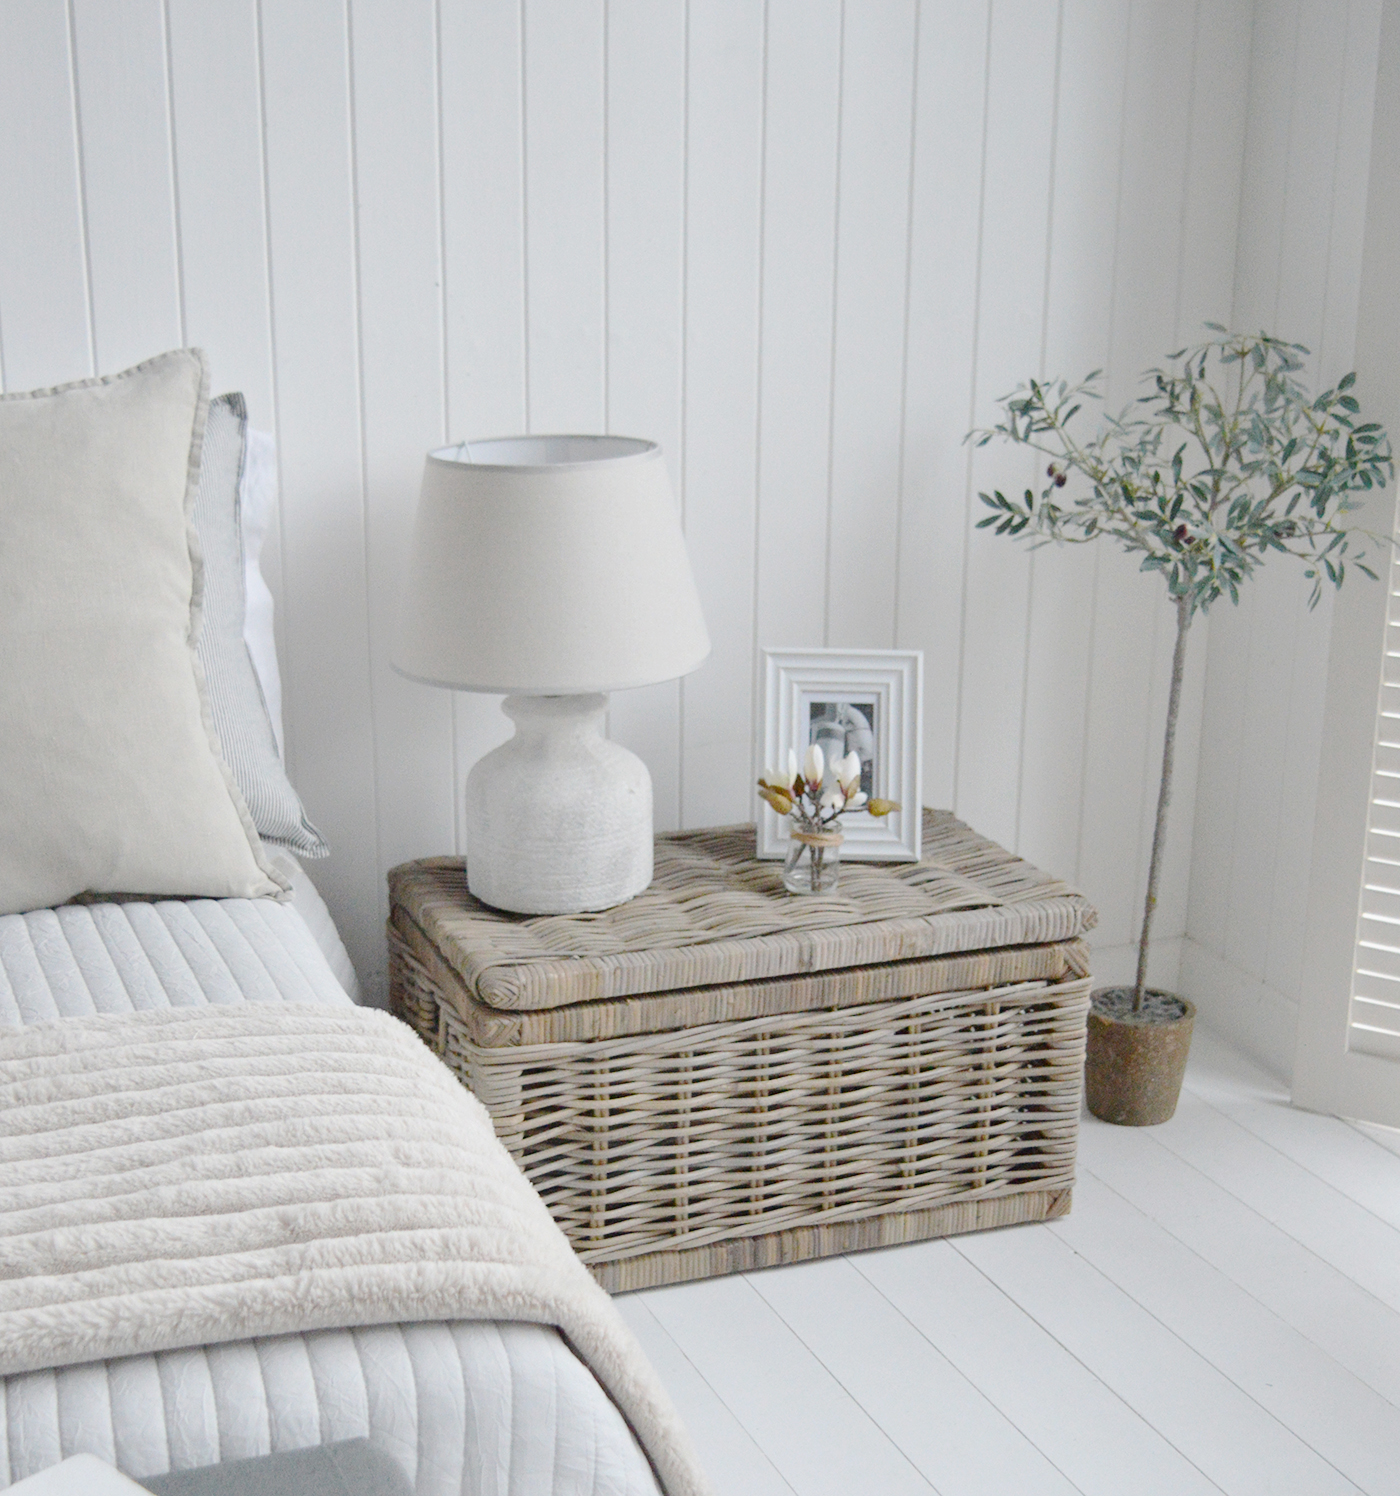 The Seaside basket as a bedside in a modern coastal styled bedroom interior